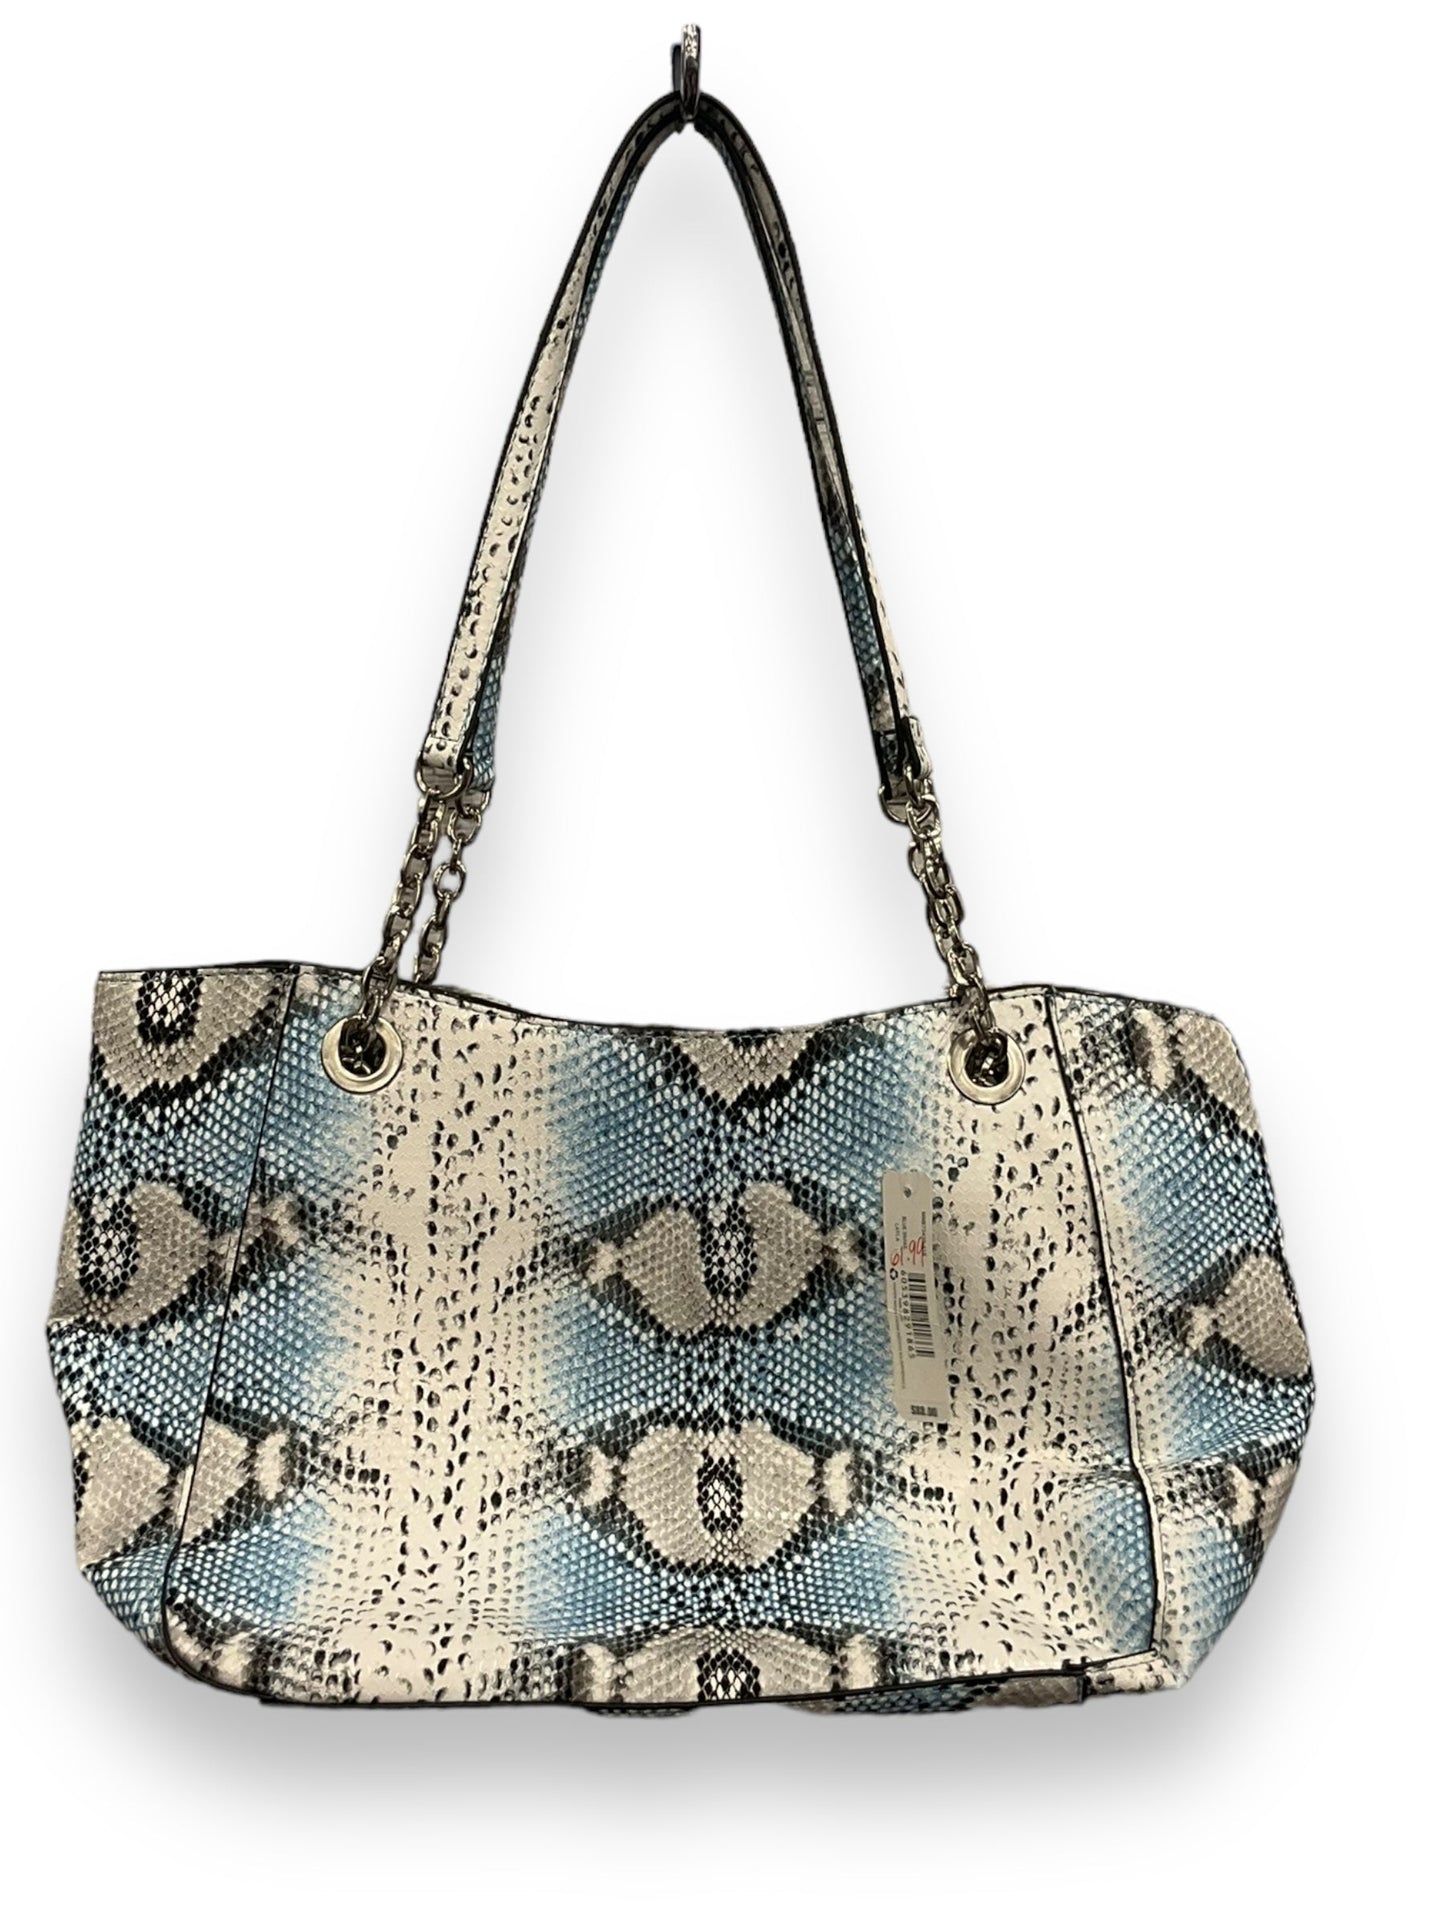 Handbag By New Directions  Size: Medium